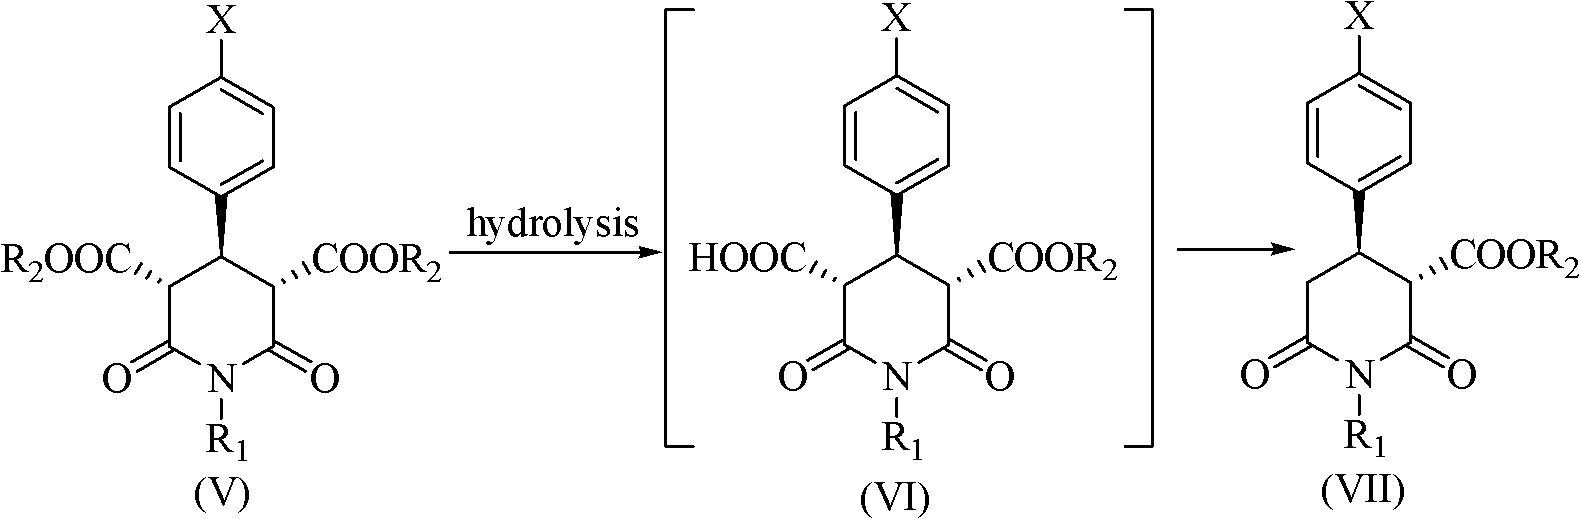 Method for preparing paroxetine intermediate by enzymatic selective hydrolysis in ionic liquid